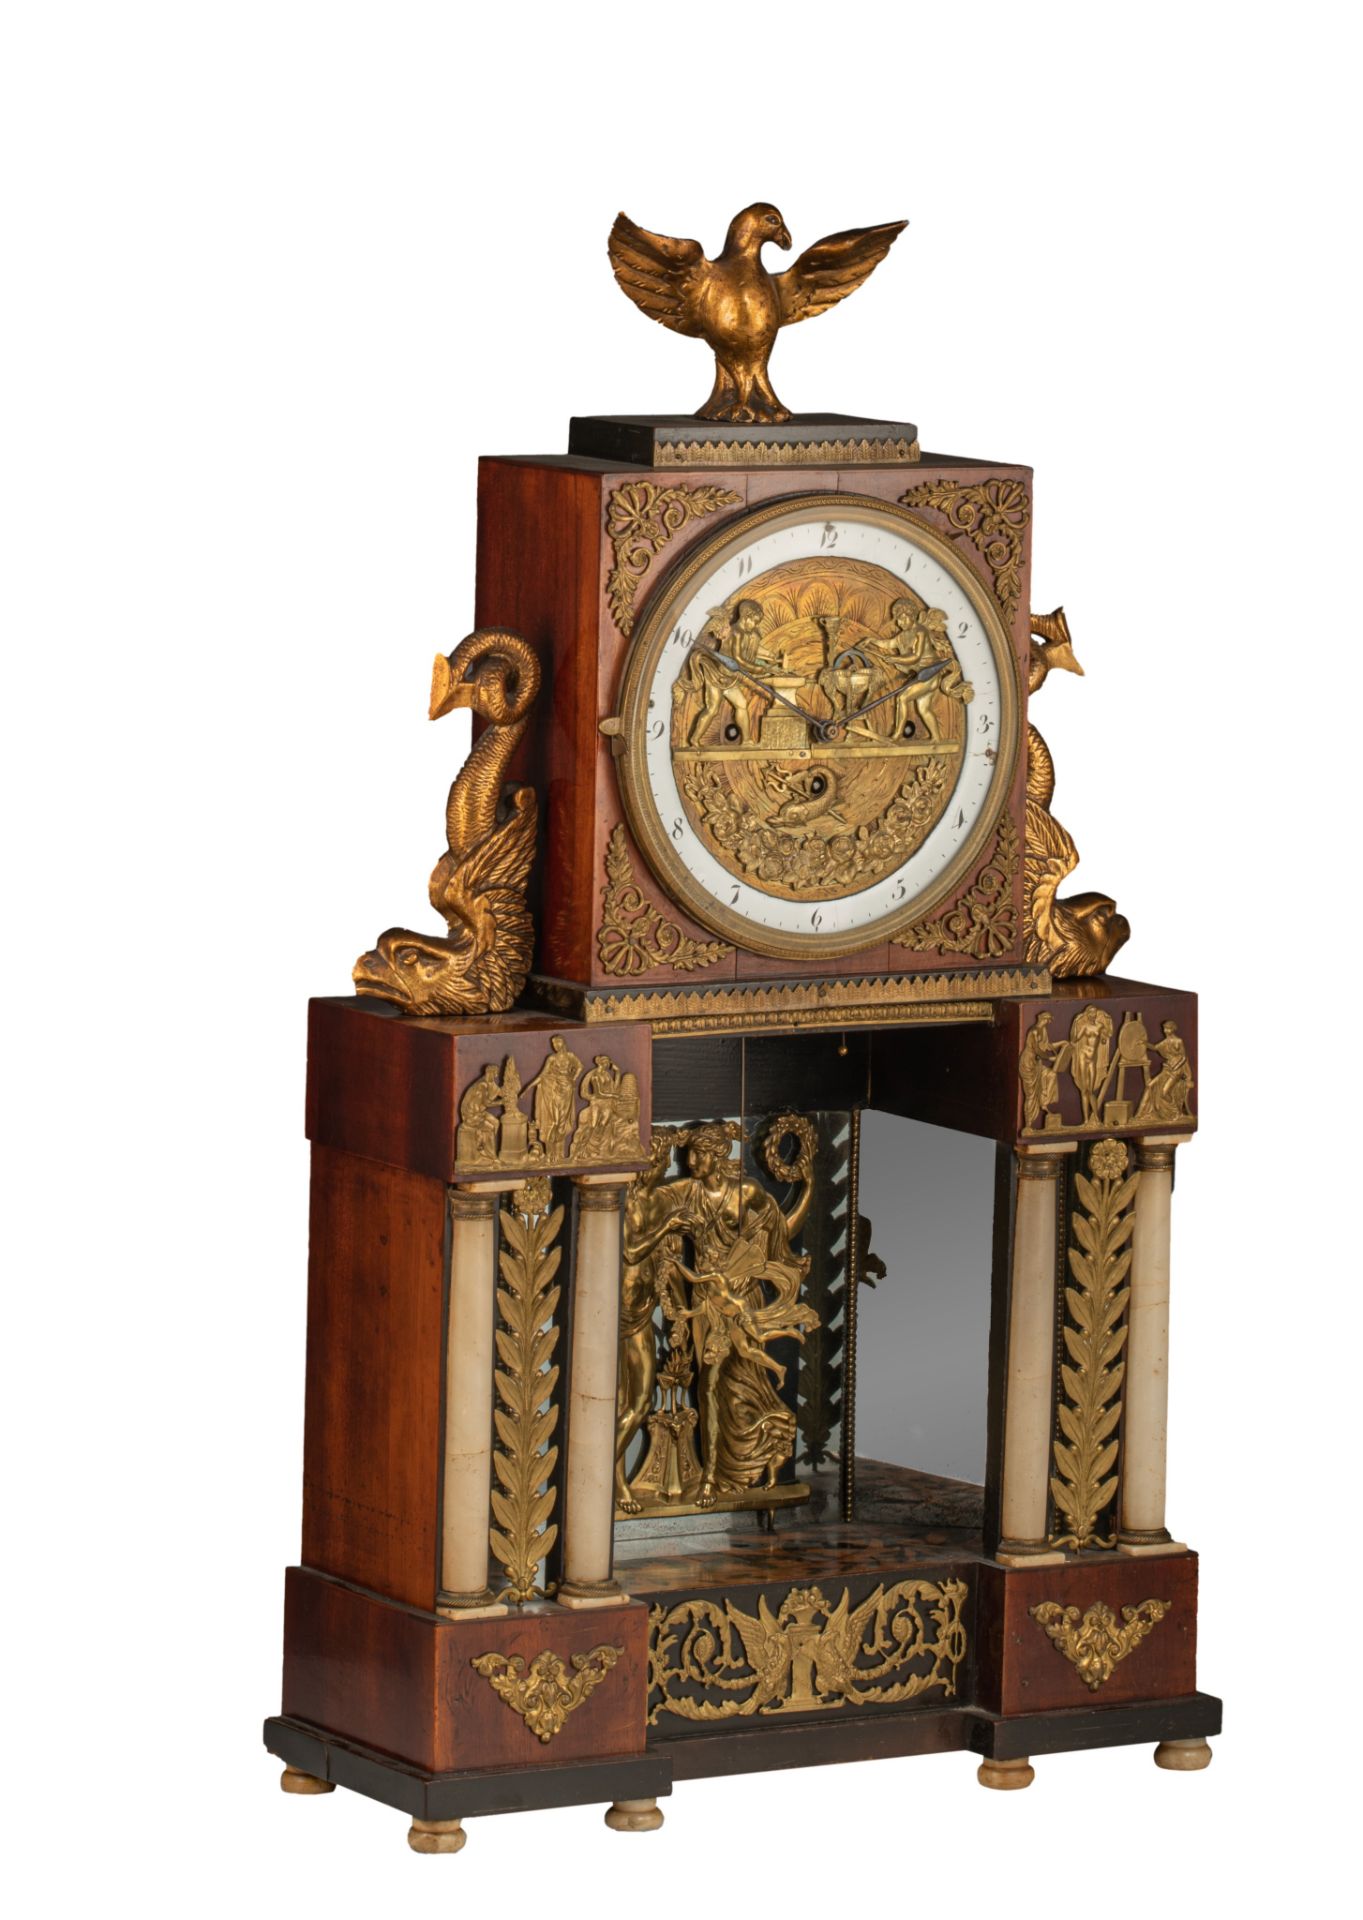 A Viennese Biedermeier automaton mantle clock, early 19thC, H 64 - W 37 cm